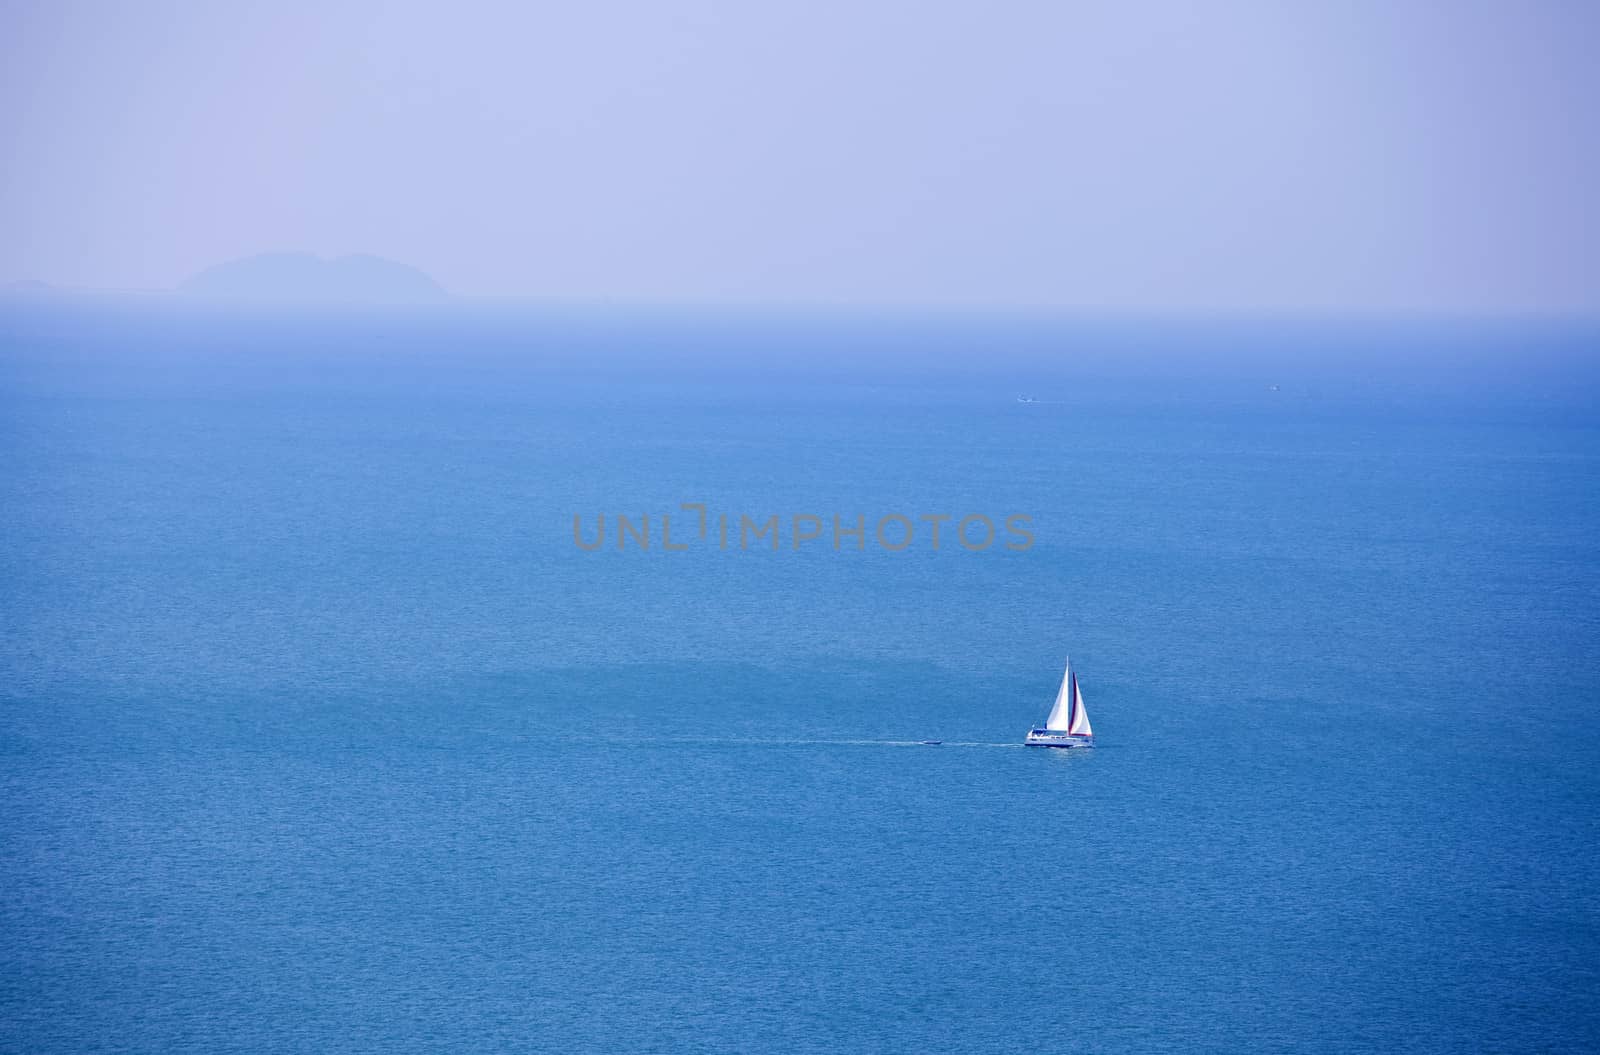 Beautiful blue ocean with white sailboat near horizon by jarenwicklund